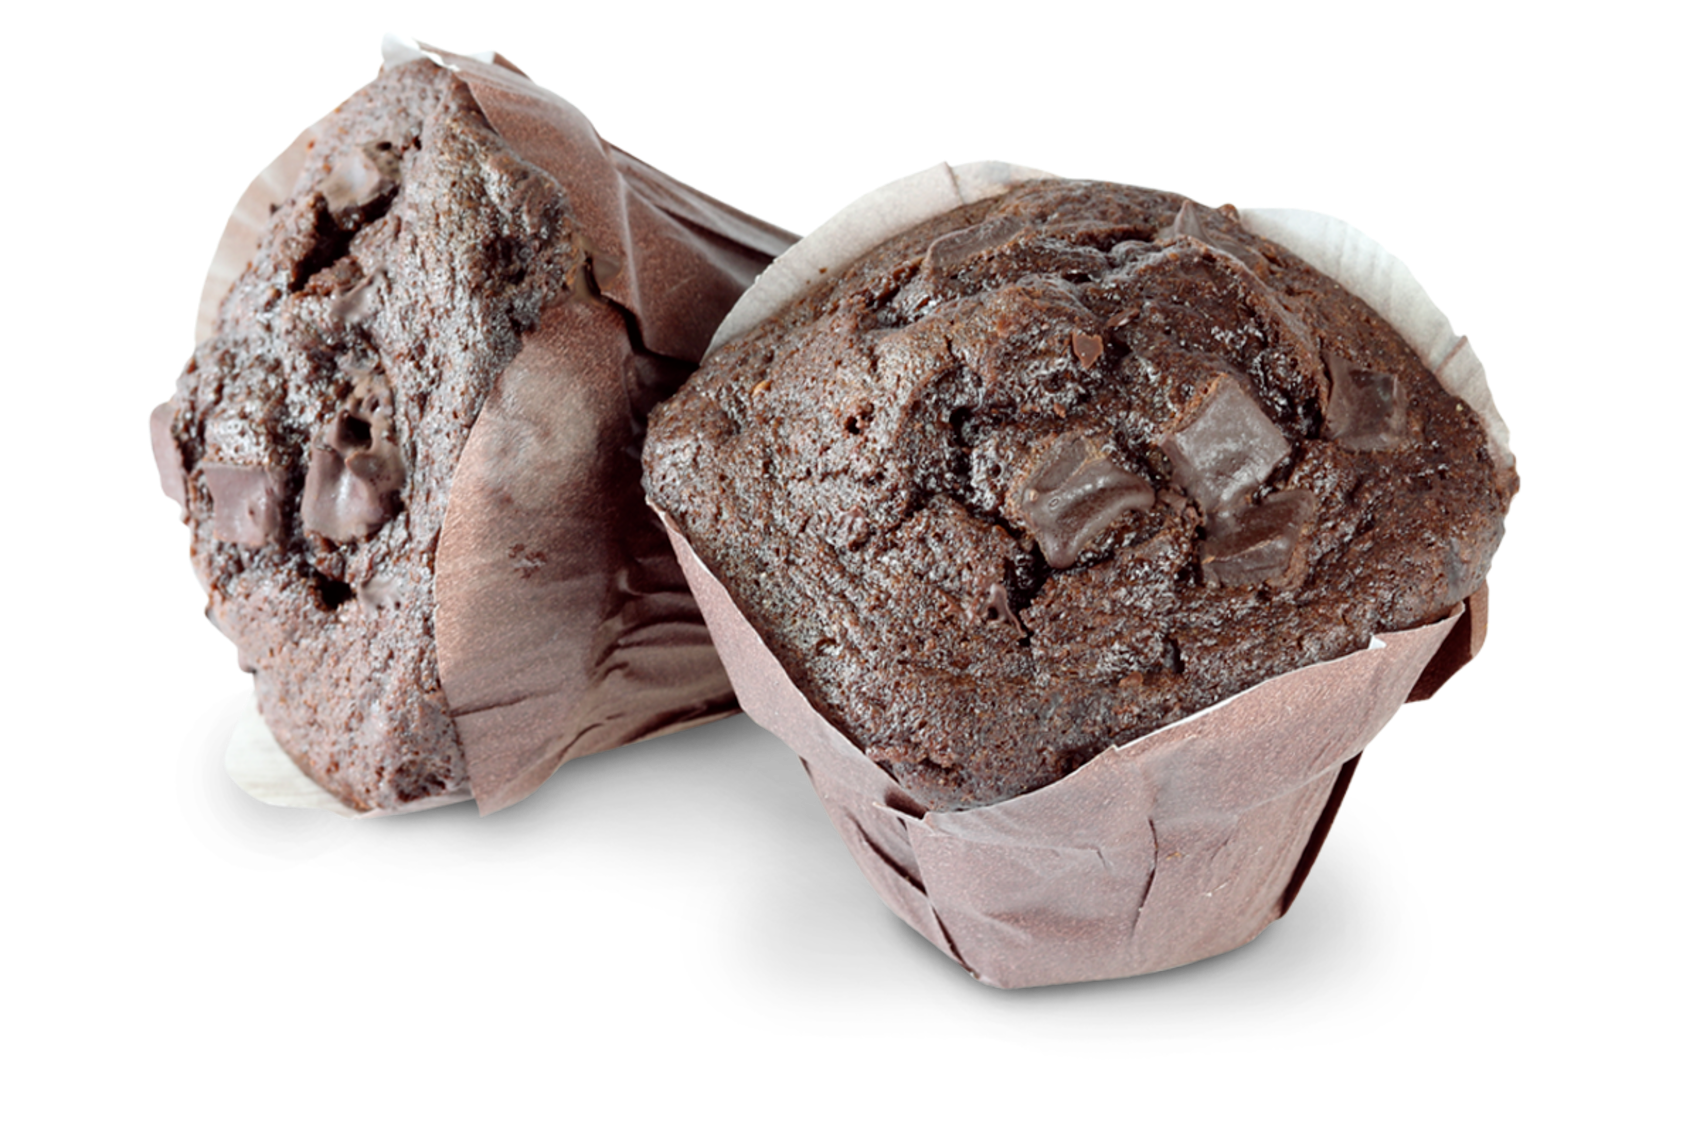 Muffin Schokolade